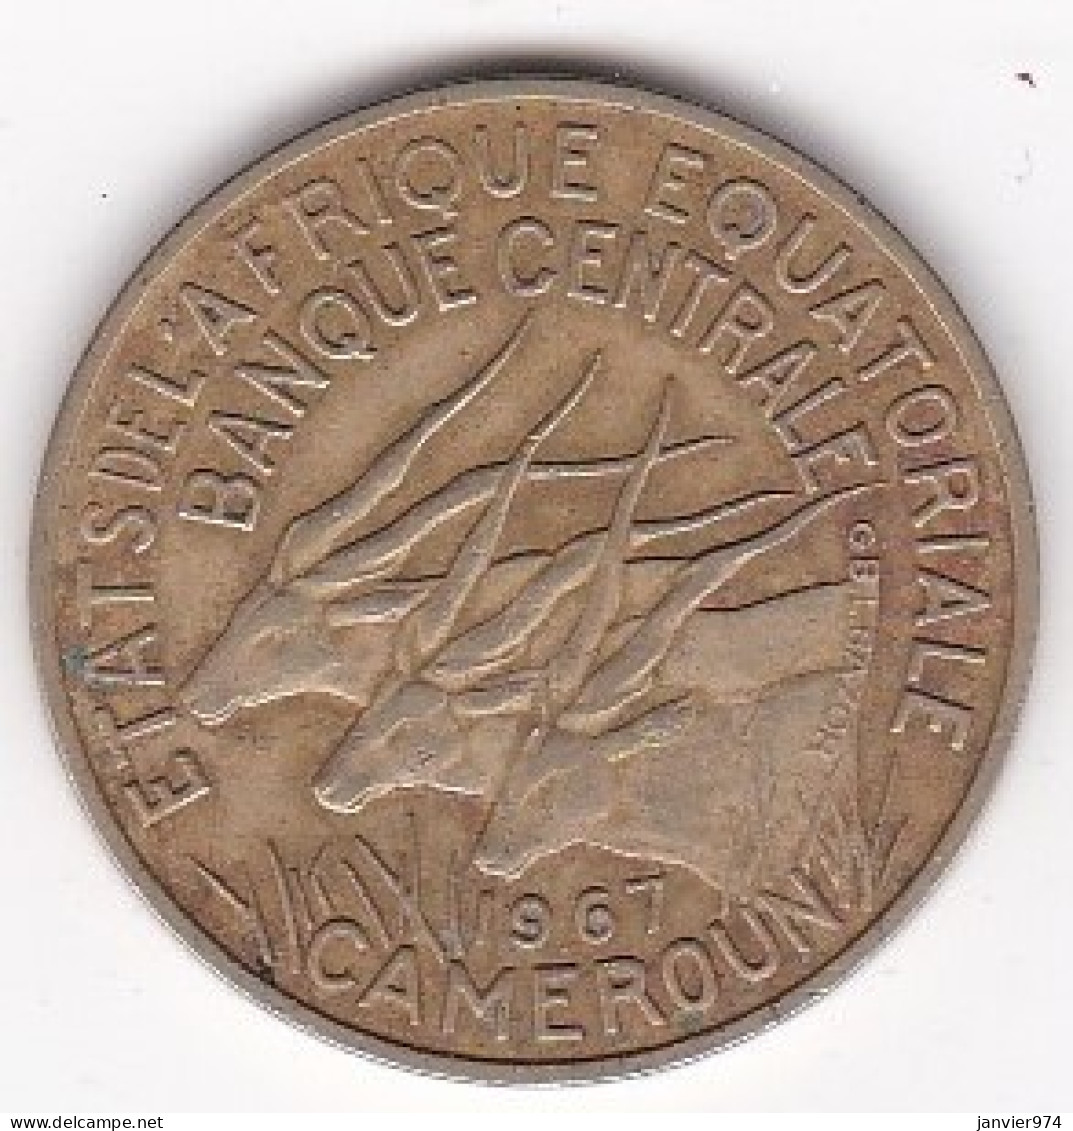 Cameroun, Afrique Equatoriale Française, 10 FRANCS 1967, Bronze Aluminium. KM# 2a - Cameroon